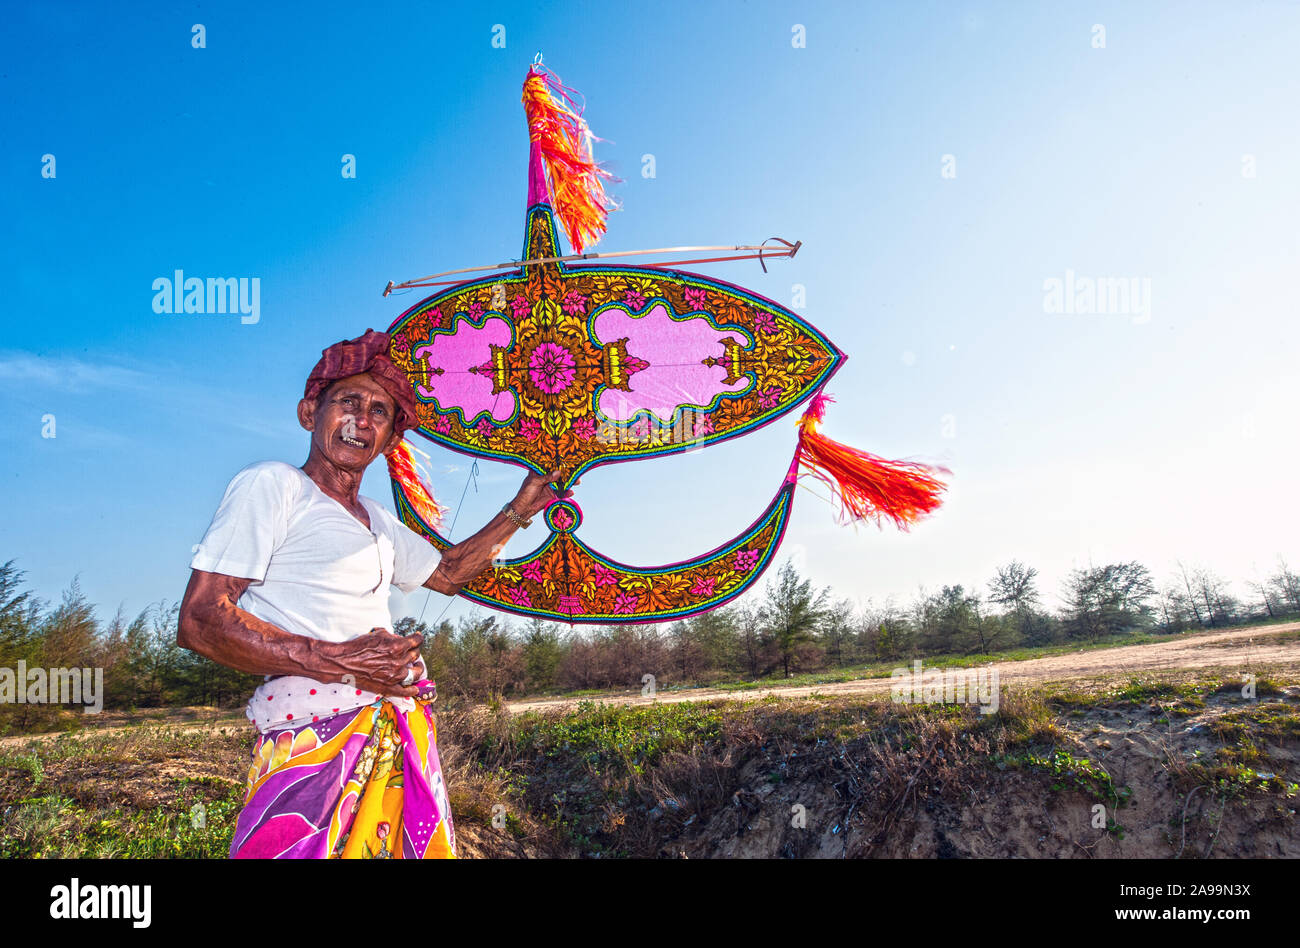 Wau bulan is an intricately designed Malaysian moon-kite that is